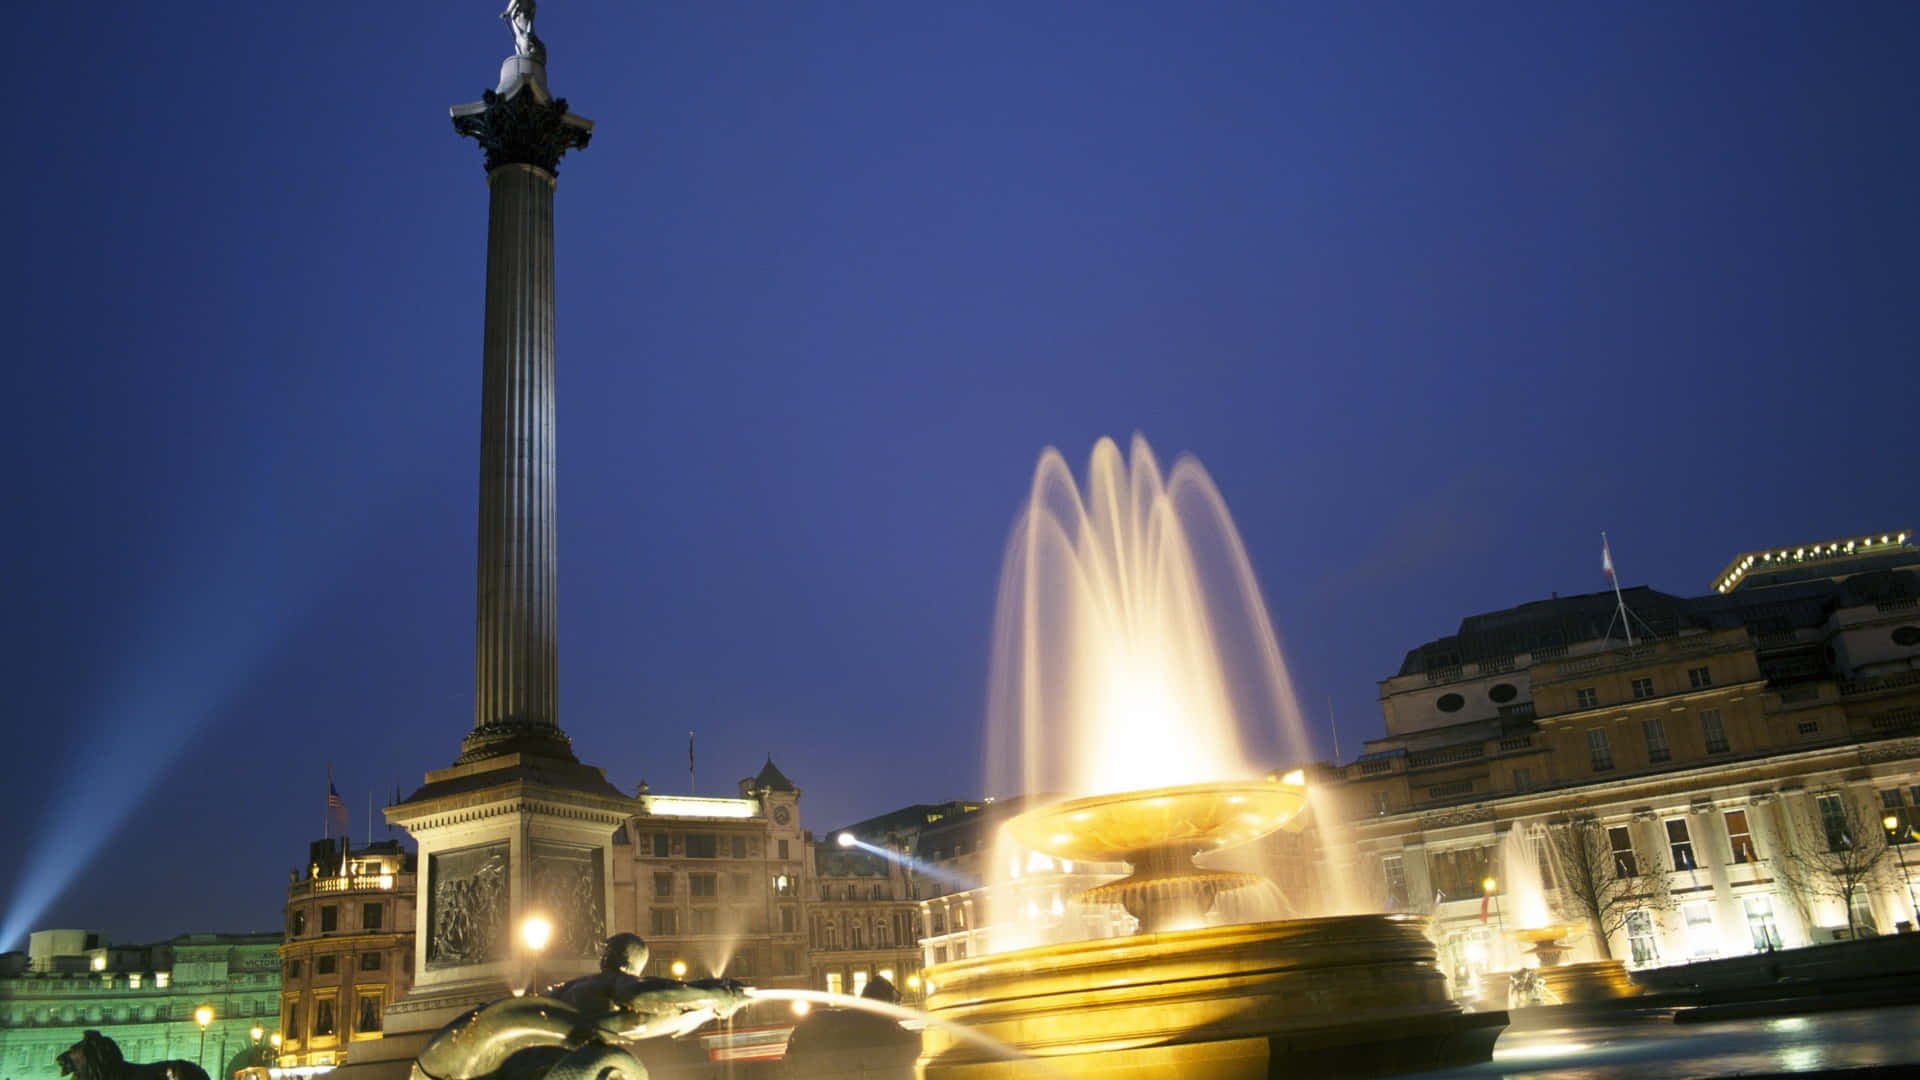 Trafalgar Square Fountain At Night Picture